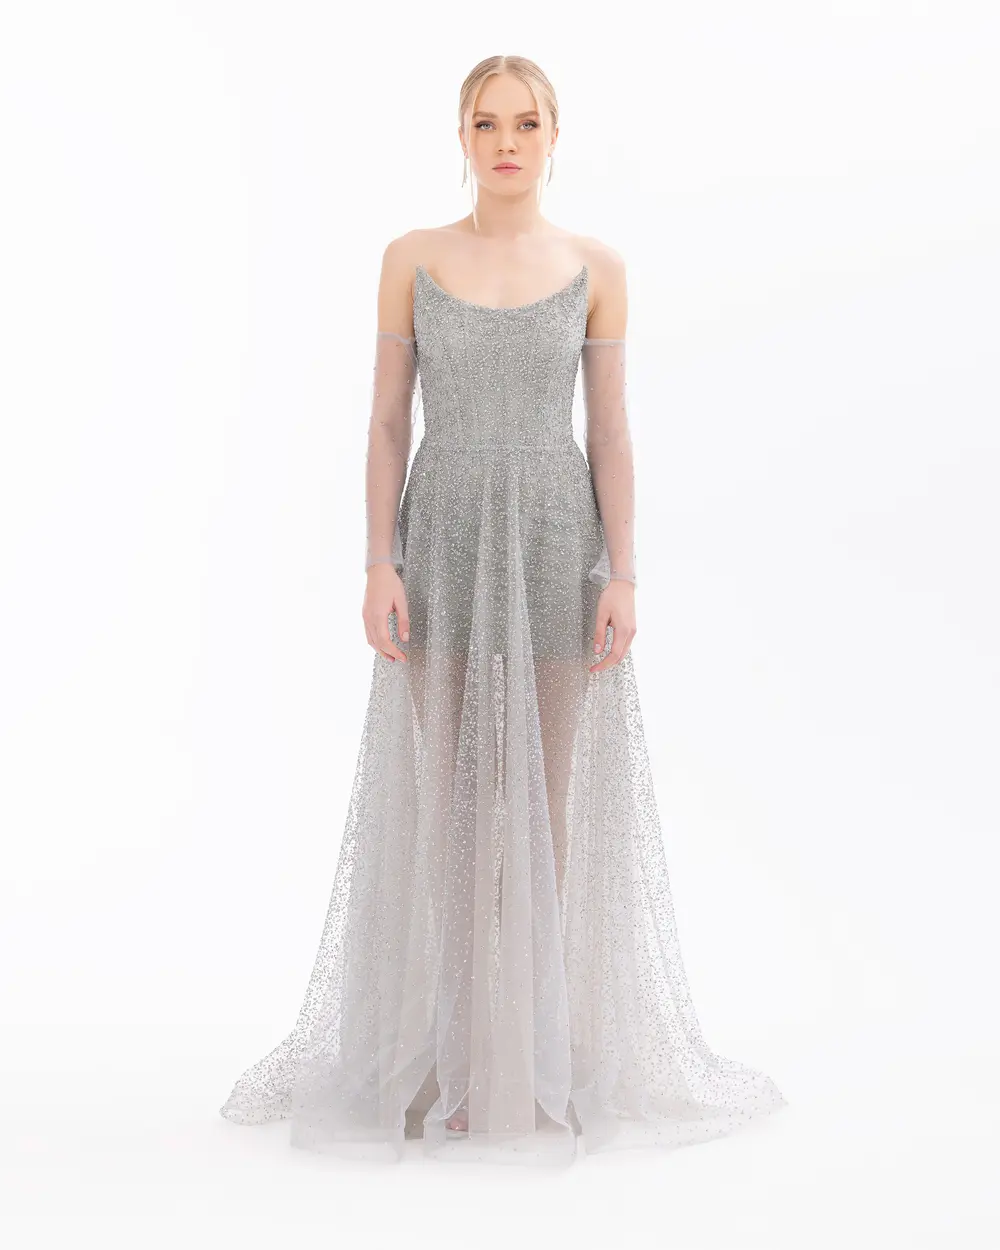 Silvery Strapless Maxi Length Evening Dress